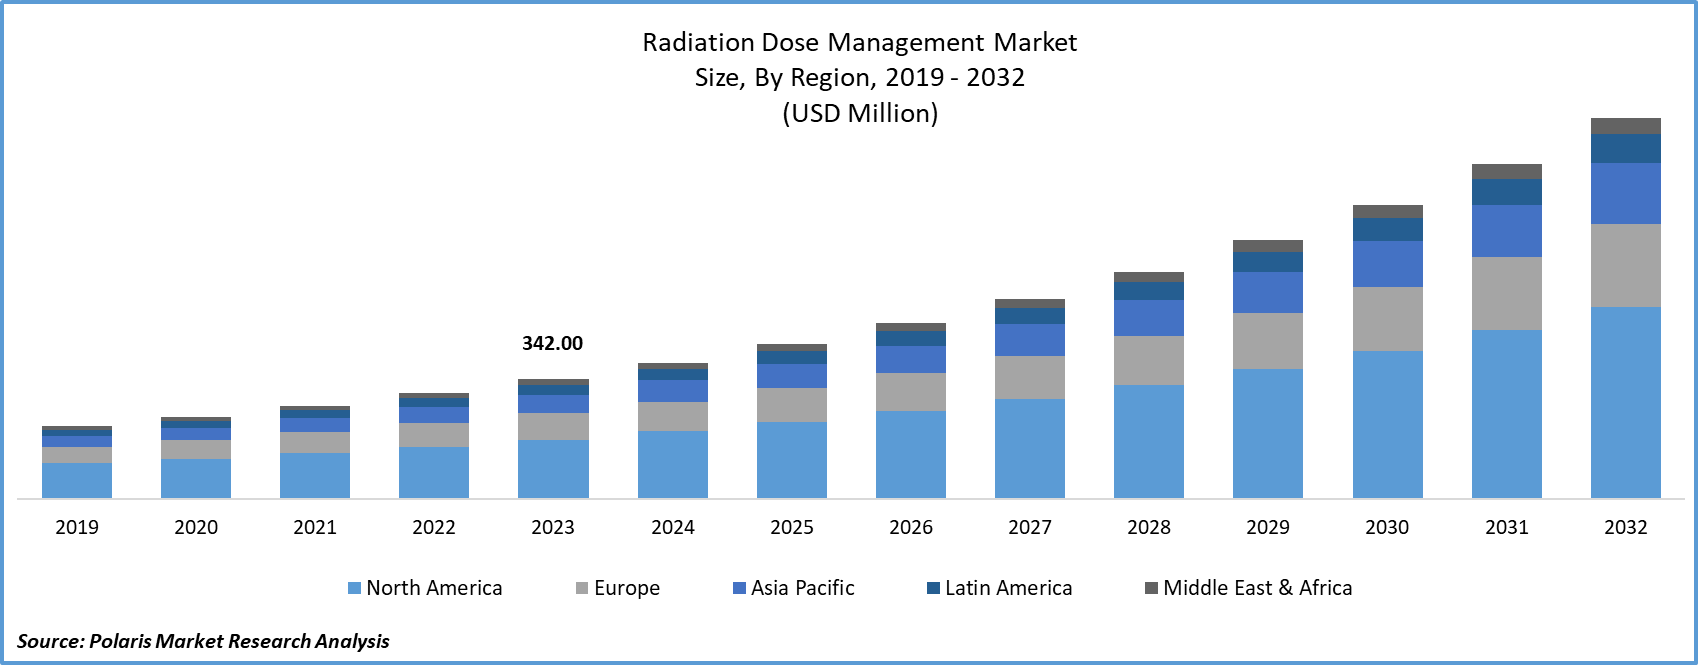 Radiation Dose Management Market Size